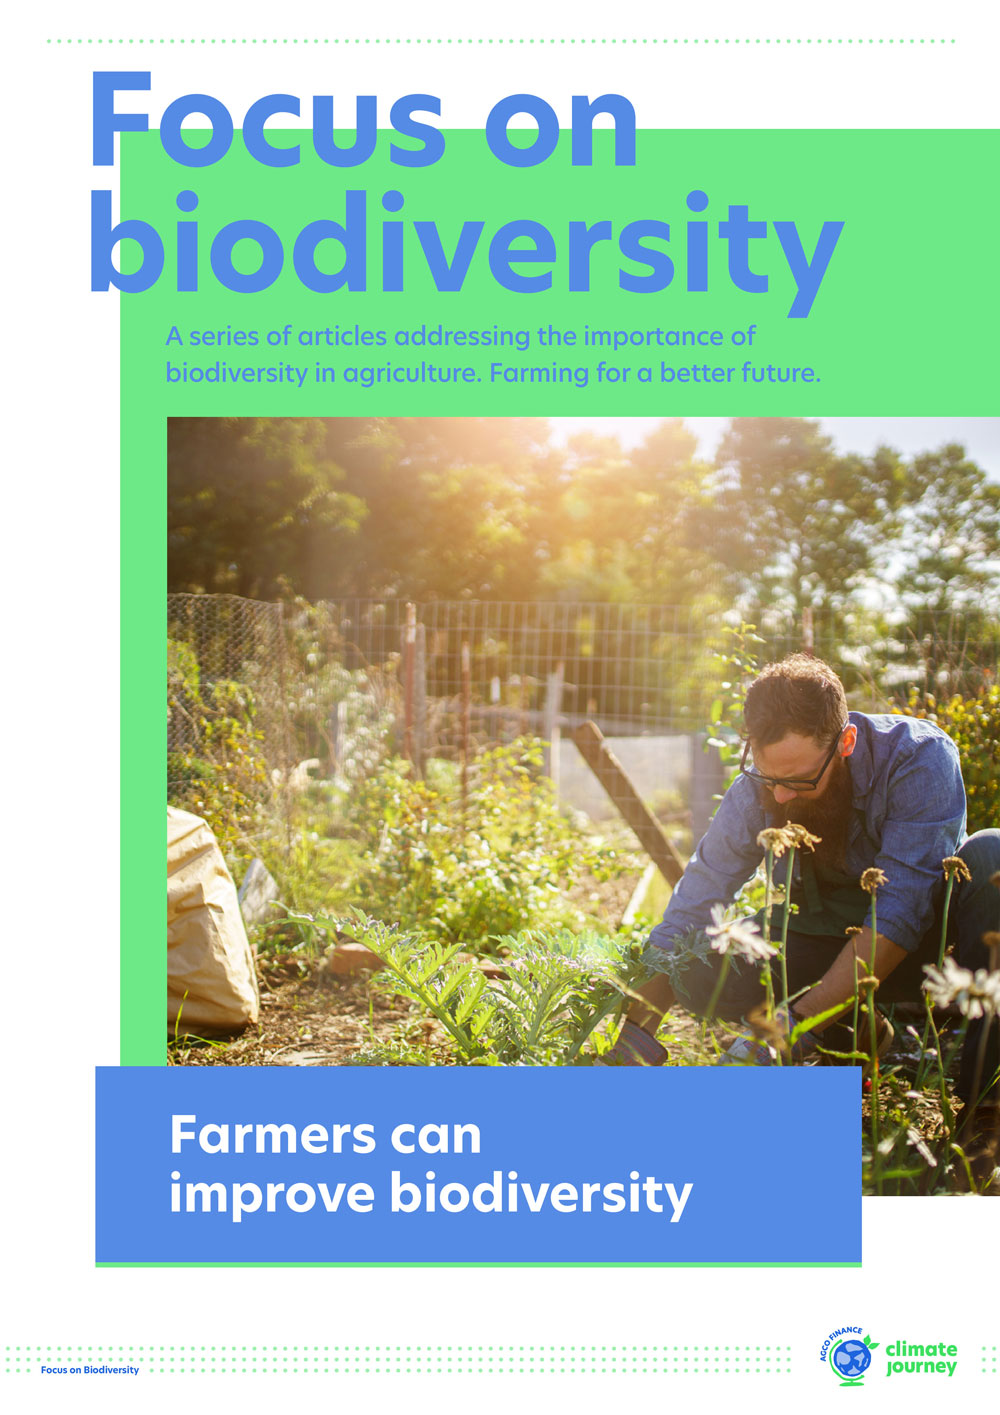 Focus on biodiversity: Farmers can improve biodiversity